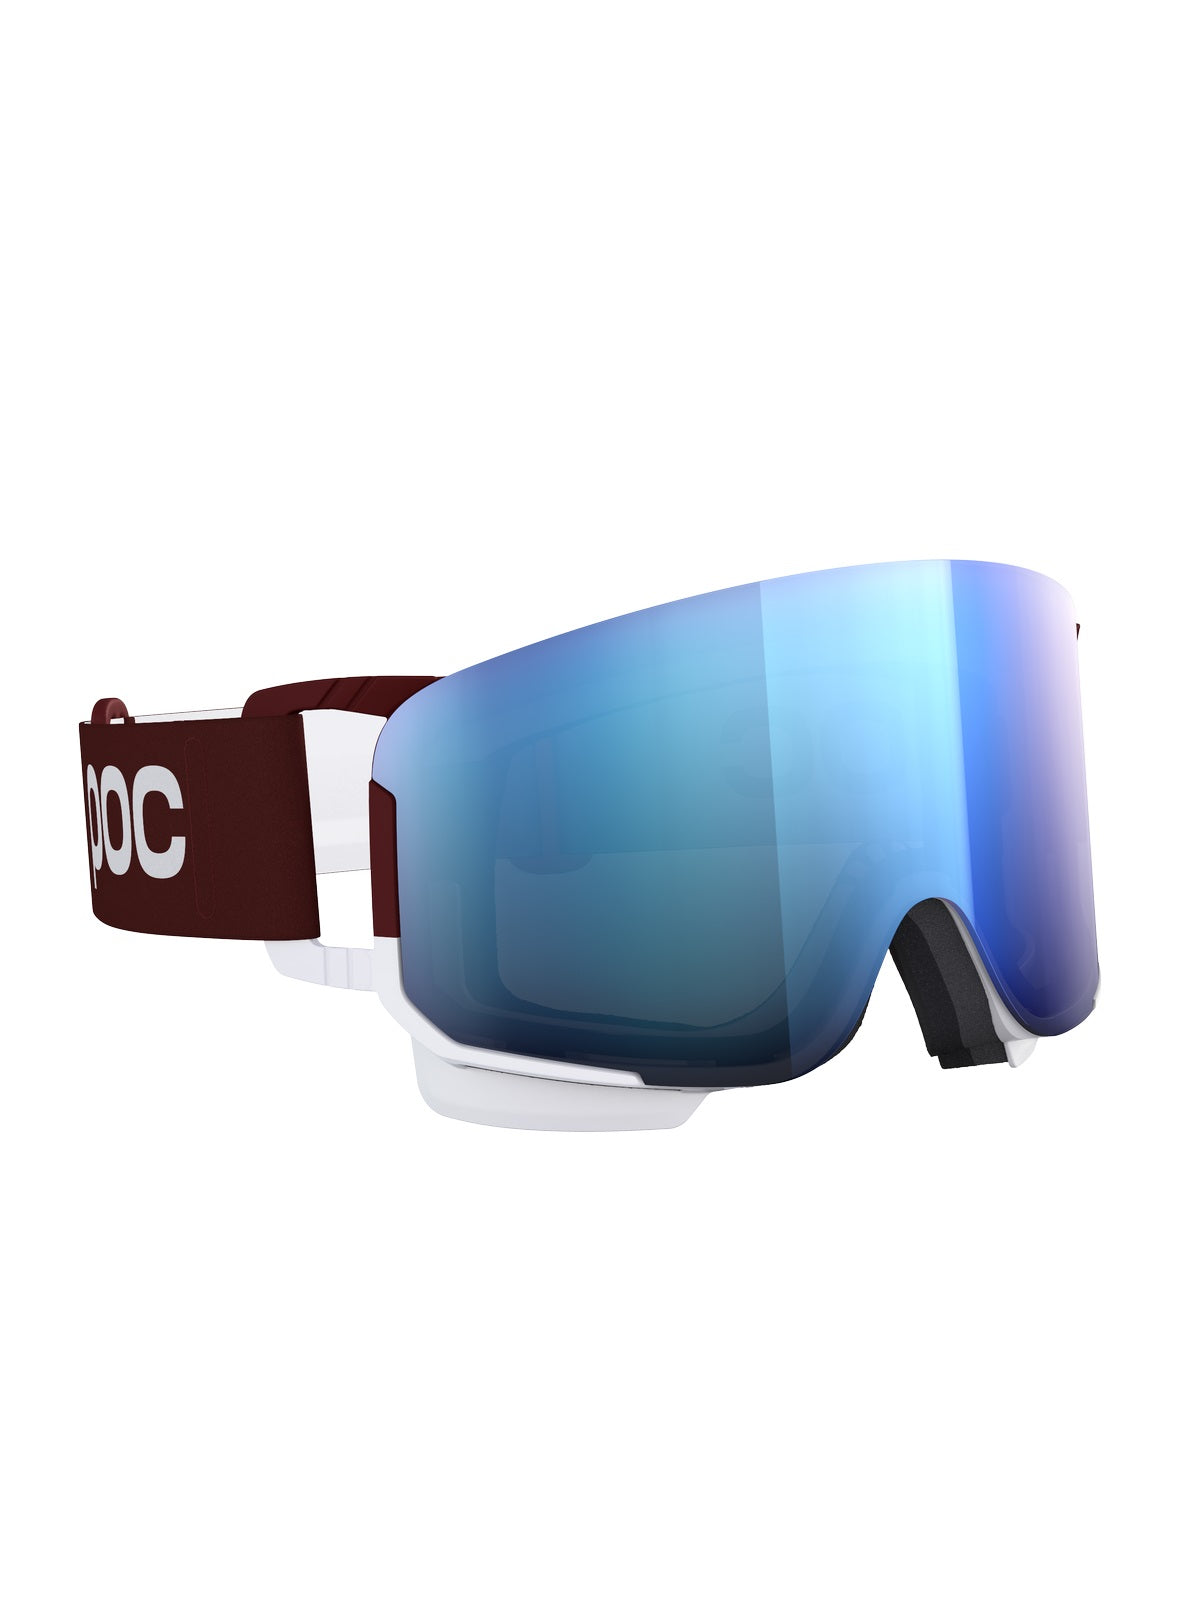 Gogle narciarskie POC Nexal Clarity Comp - Garnet Red/Hyd. White/Spektris Blue Cat 2